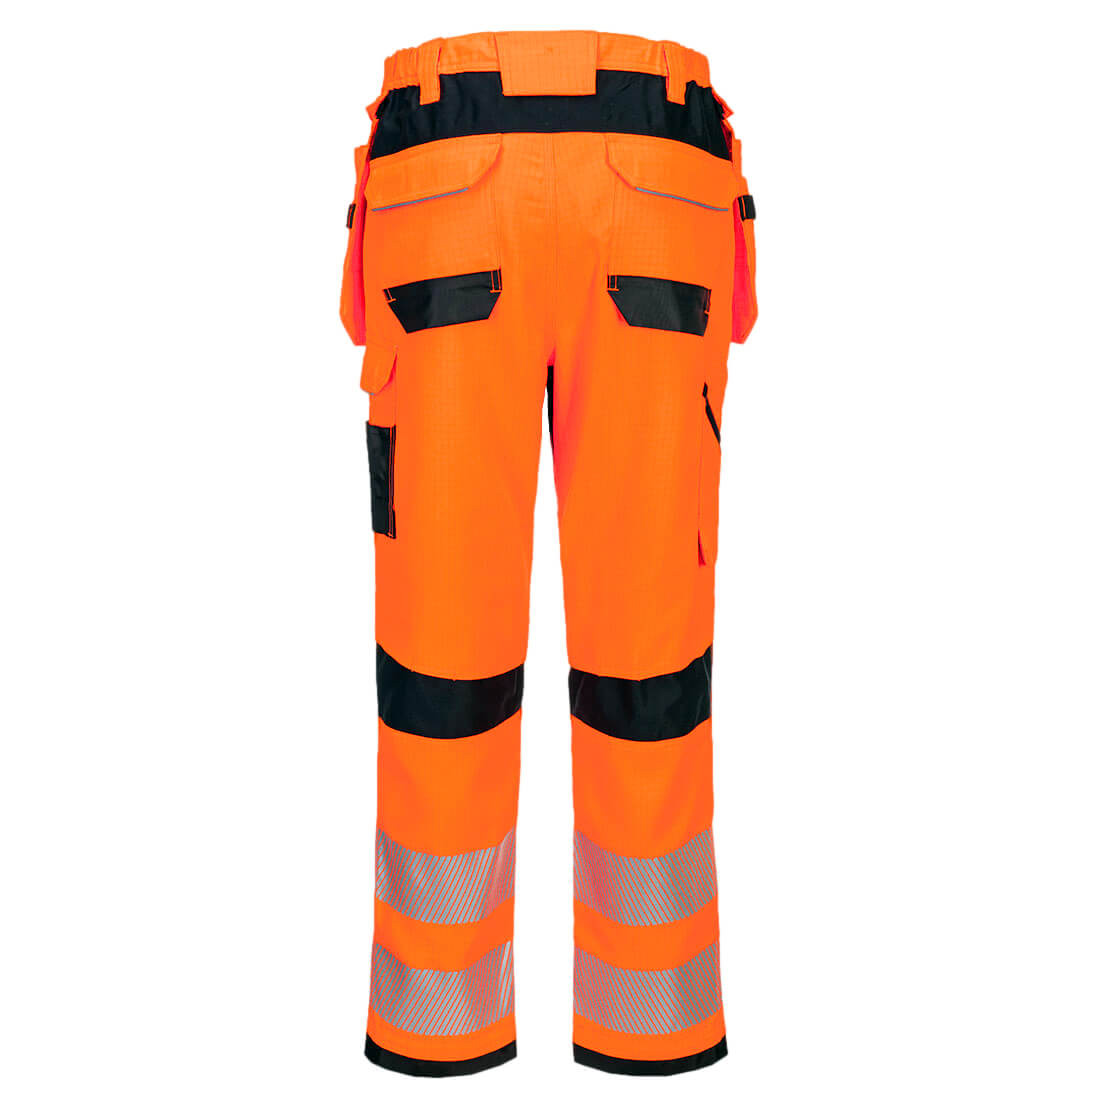 Pantaloni de lucru PW3 igifugi HVO, cu buzunare Holster - Imbracaminte de protectie